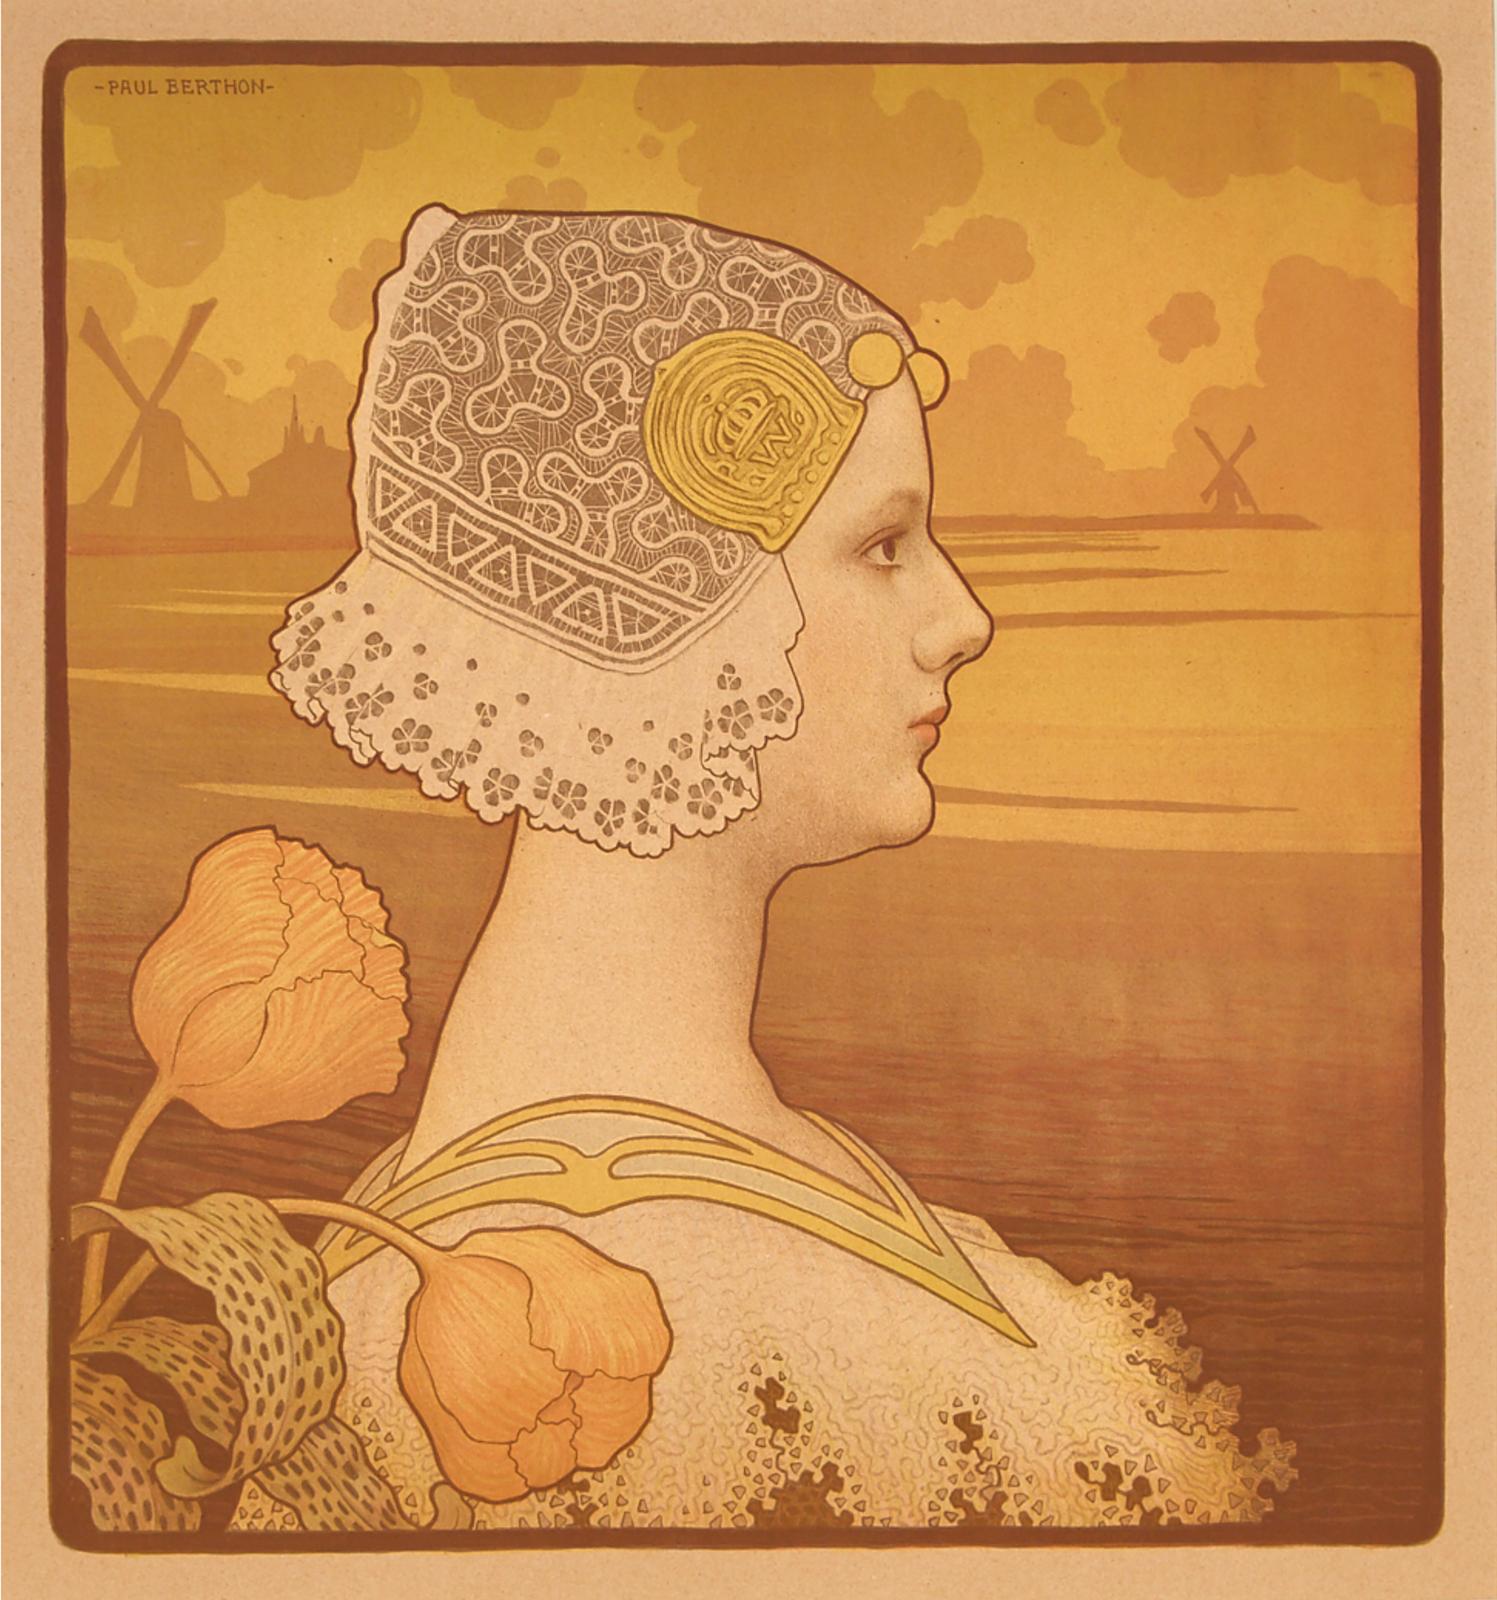 Paul Berthon (1872-1909) - La Reine Wilhemina (Queen Wilhelmina Of The Netherlands), 1901 [berthon/Grasset, P. 116, Illustrated]